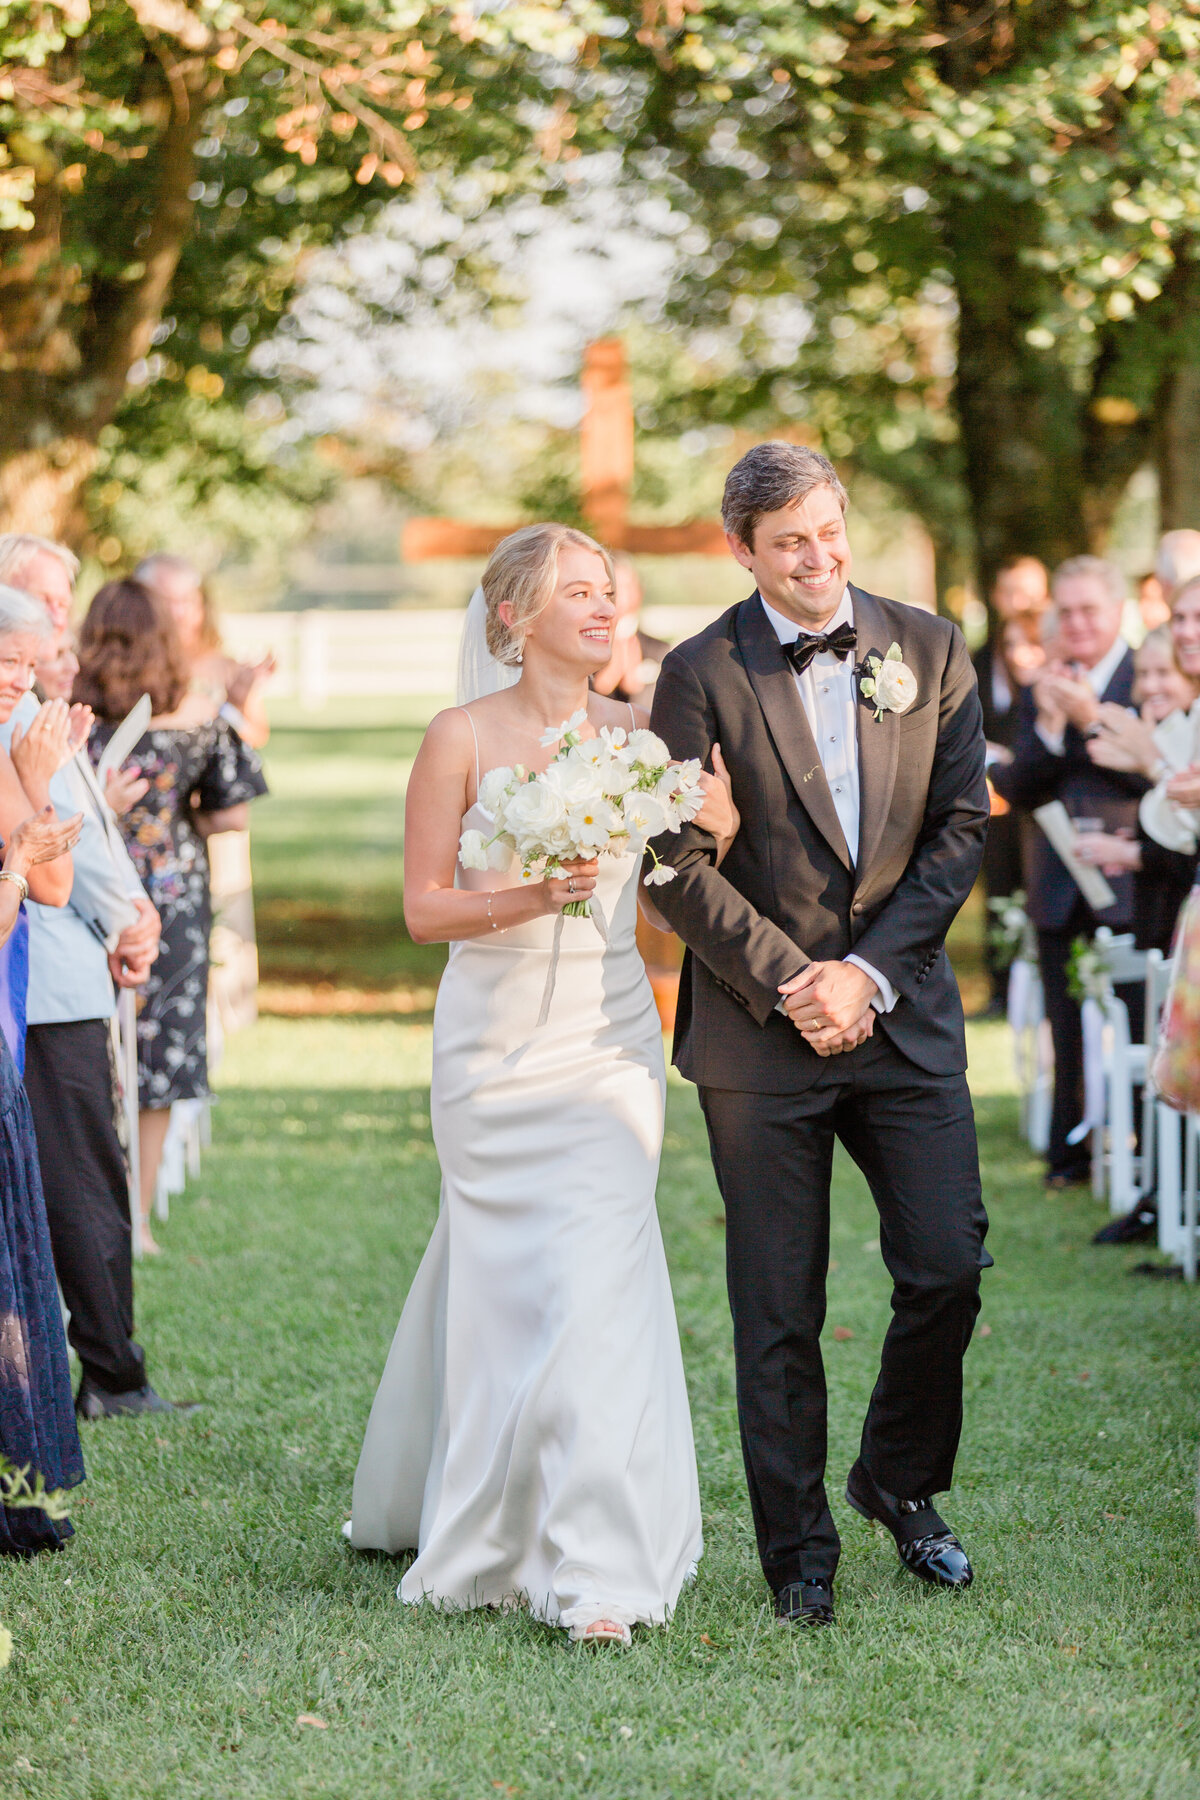 Matt&Carson-CastleHillCider-Charlottesville-Wedding-KelseyMariePhotography-September2021-0512